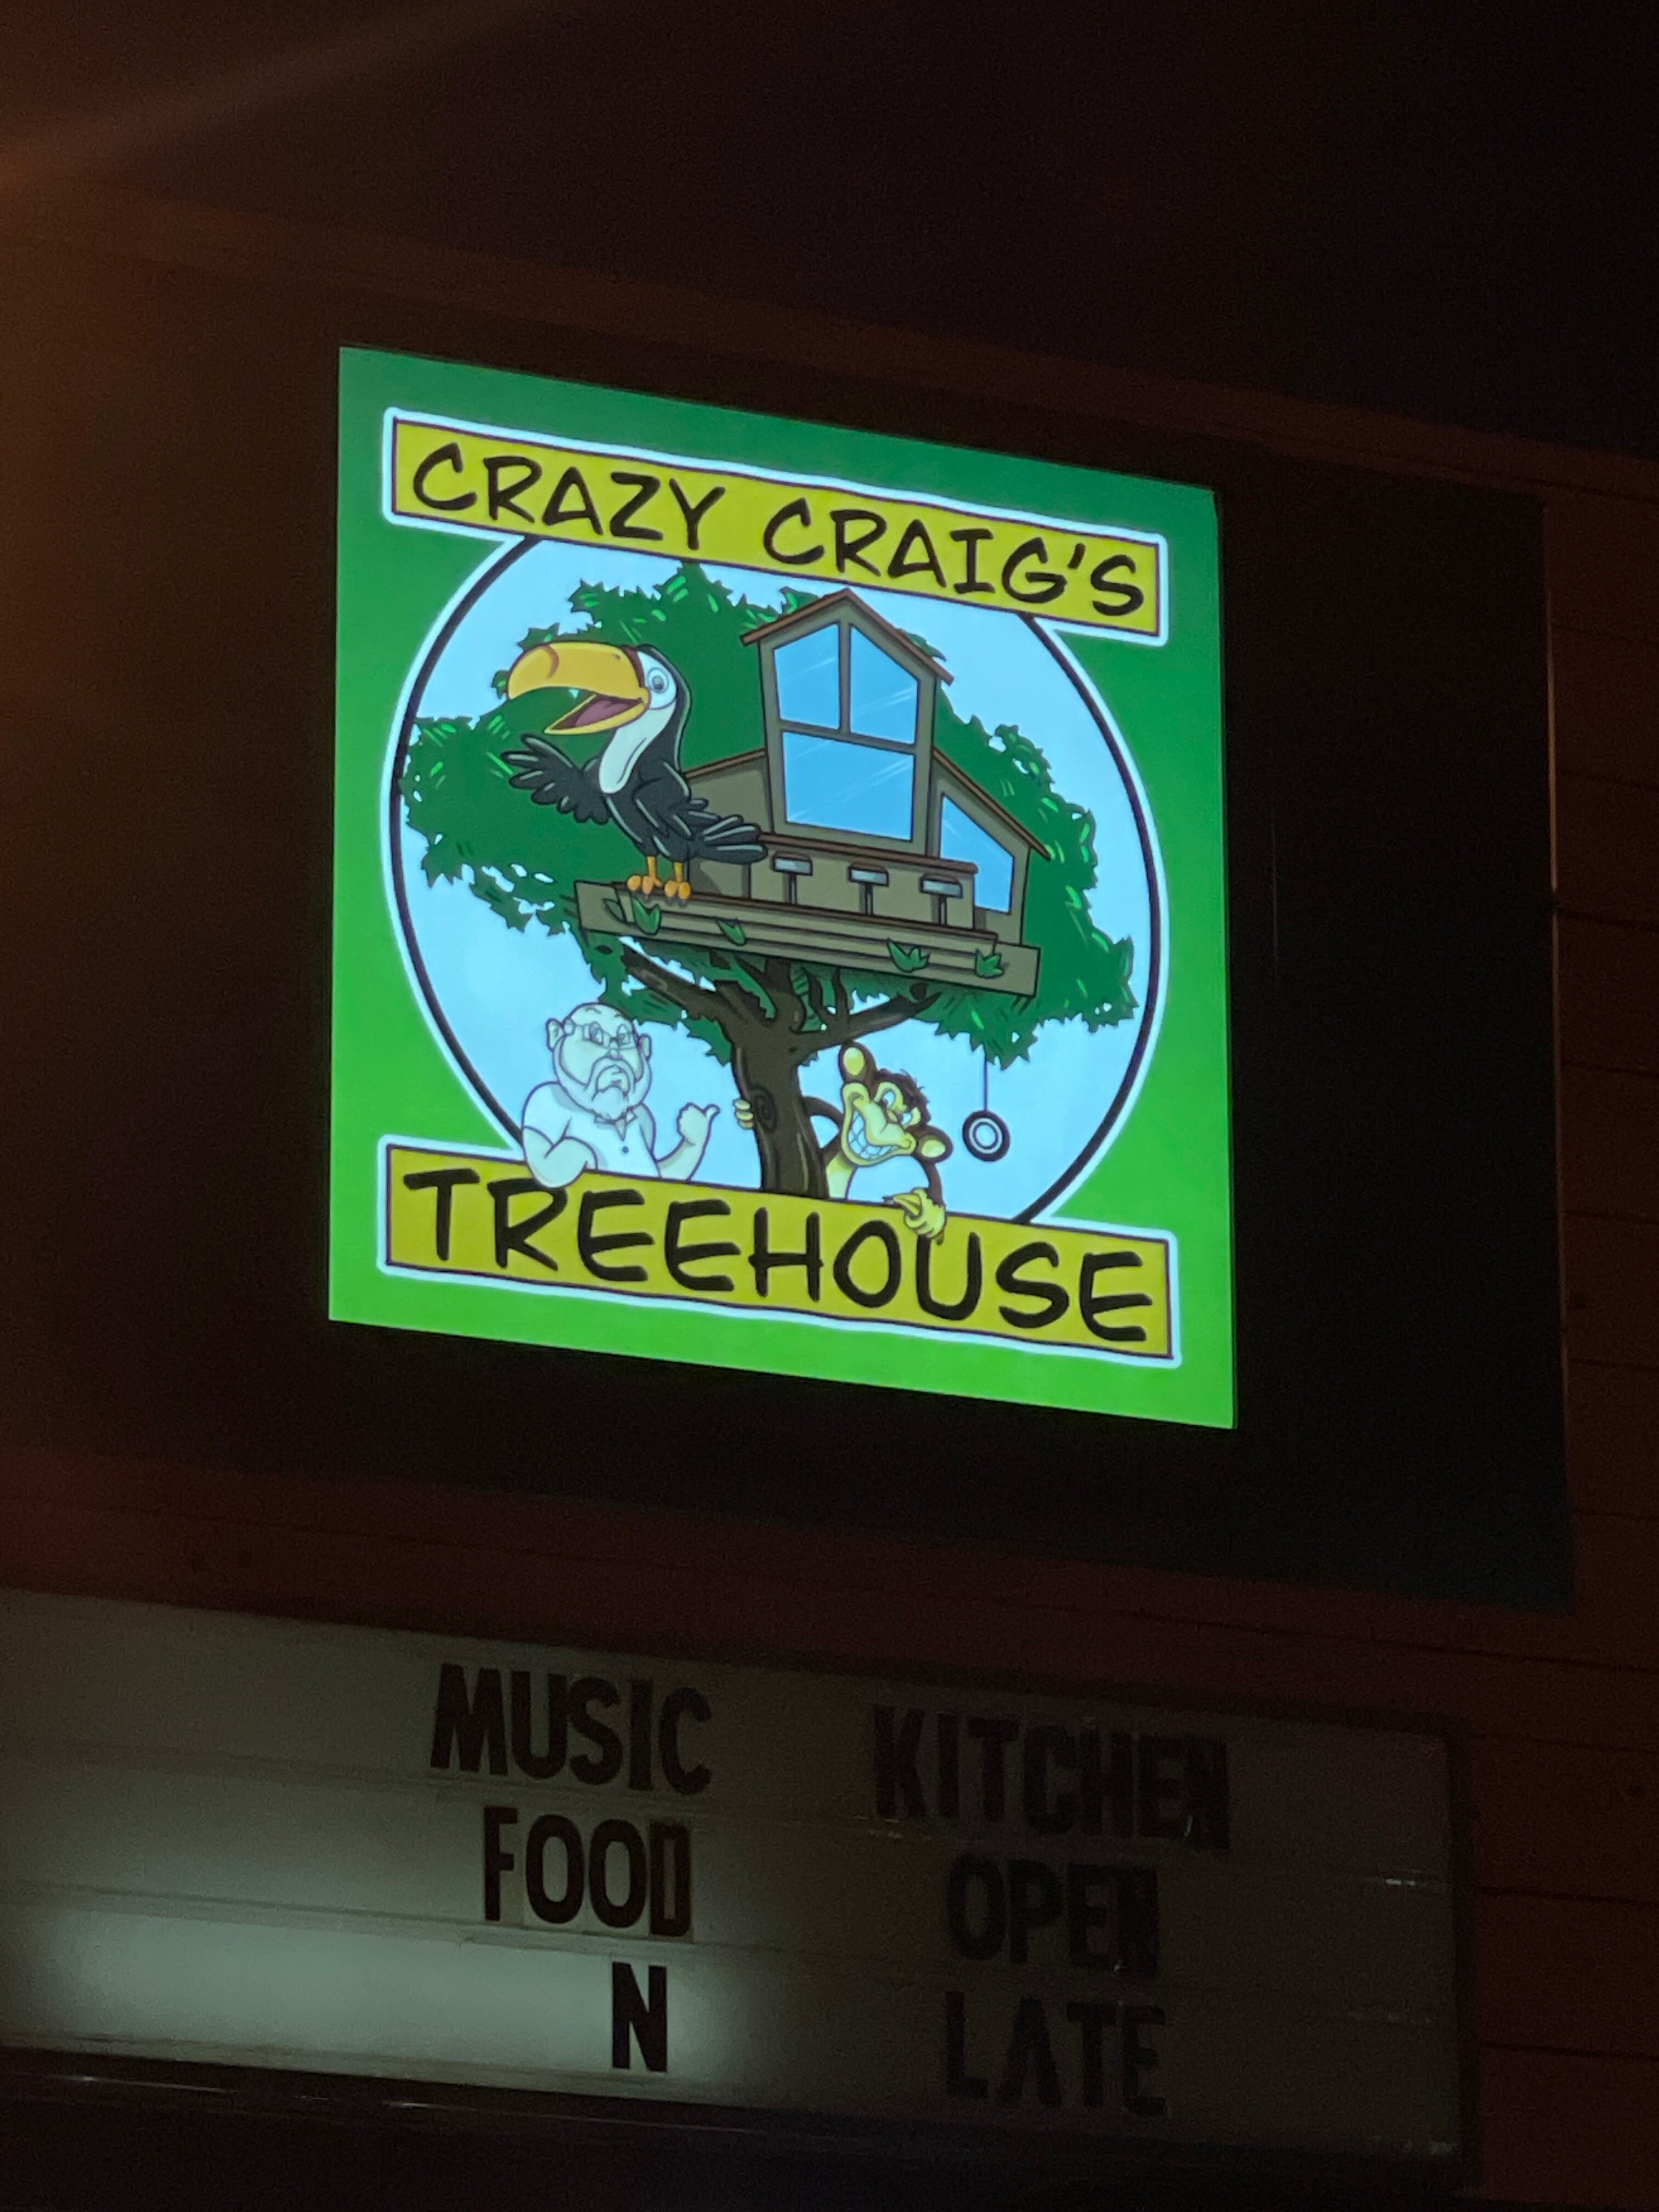 Crazy Craig's Treehouse